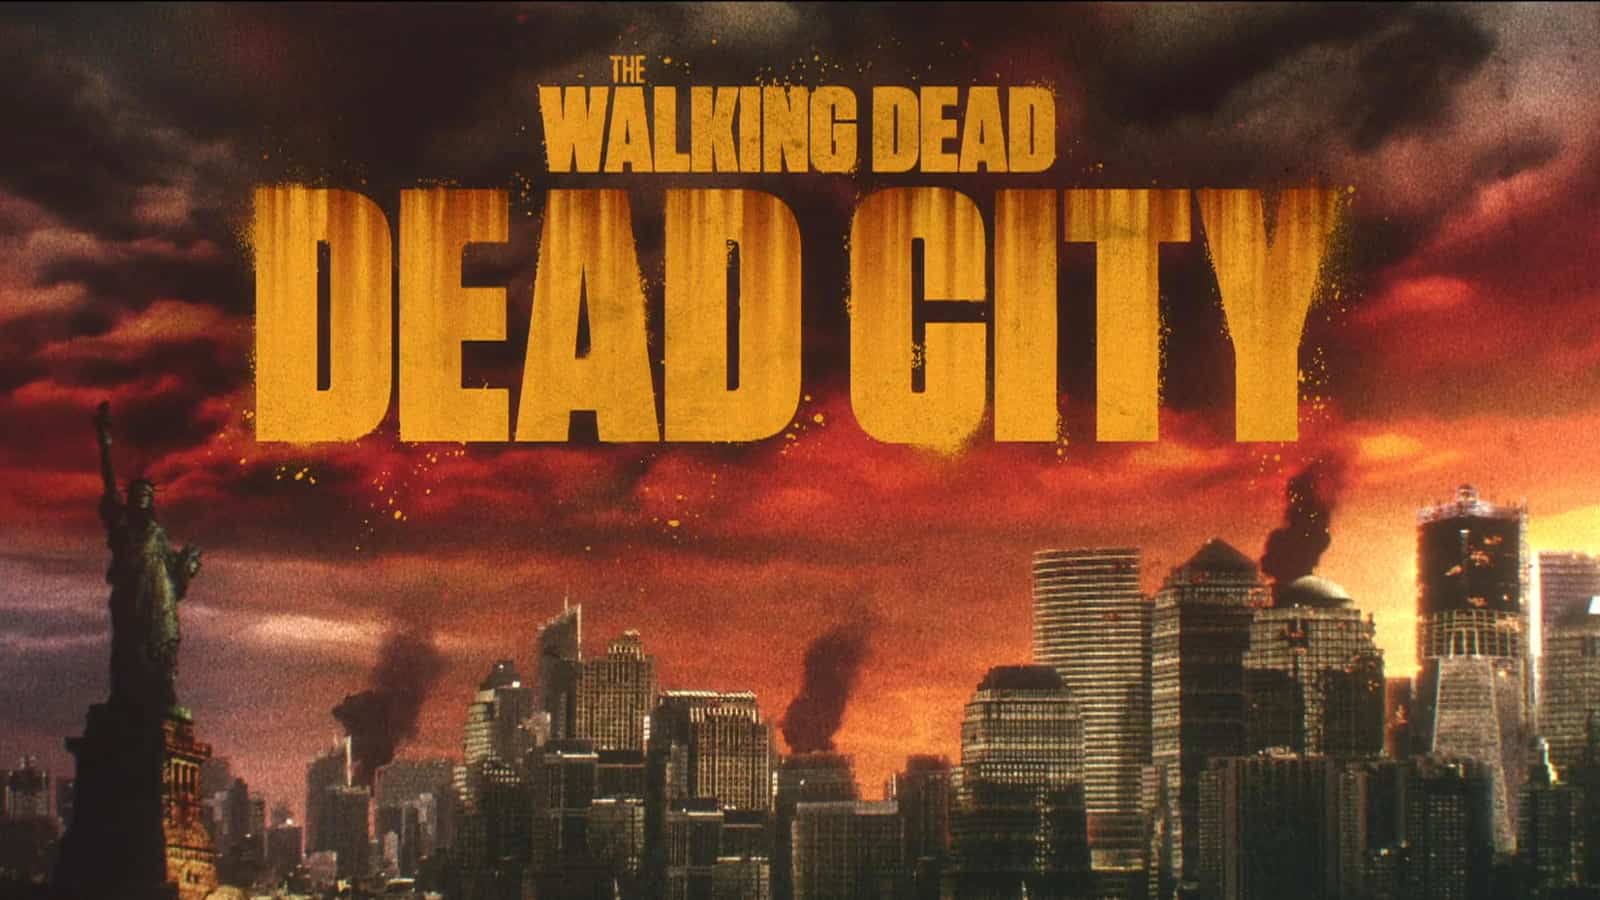 Dead City (1)